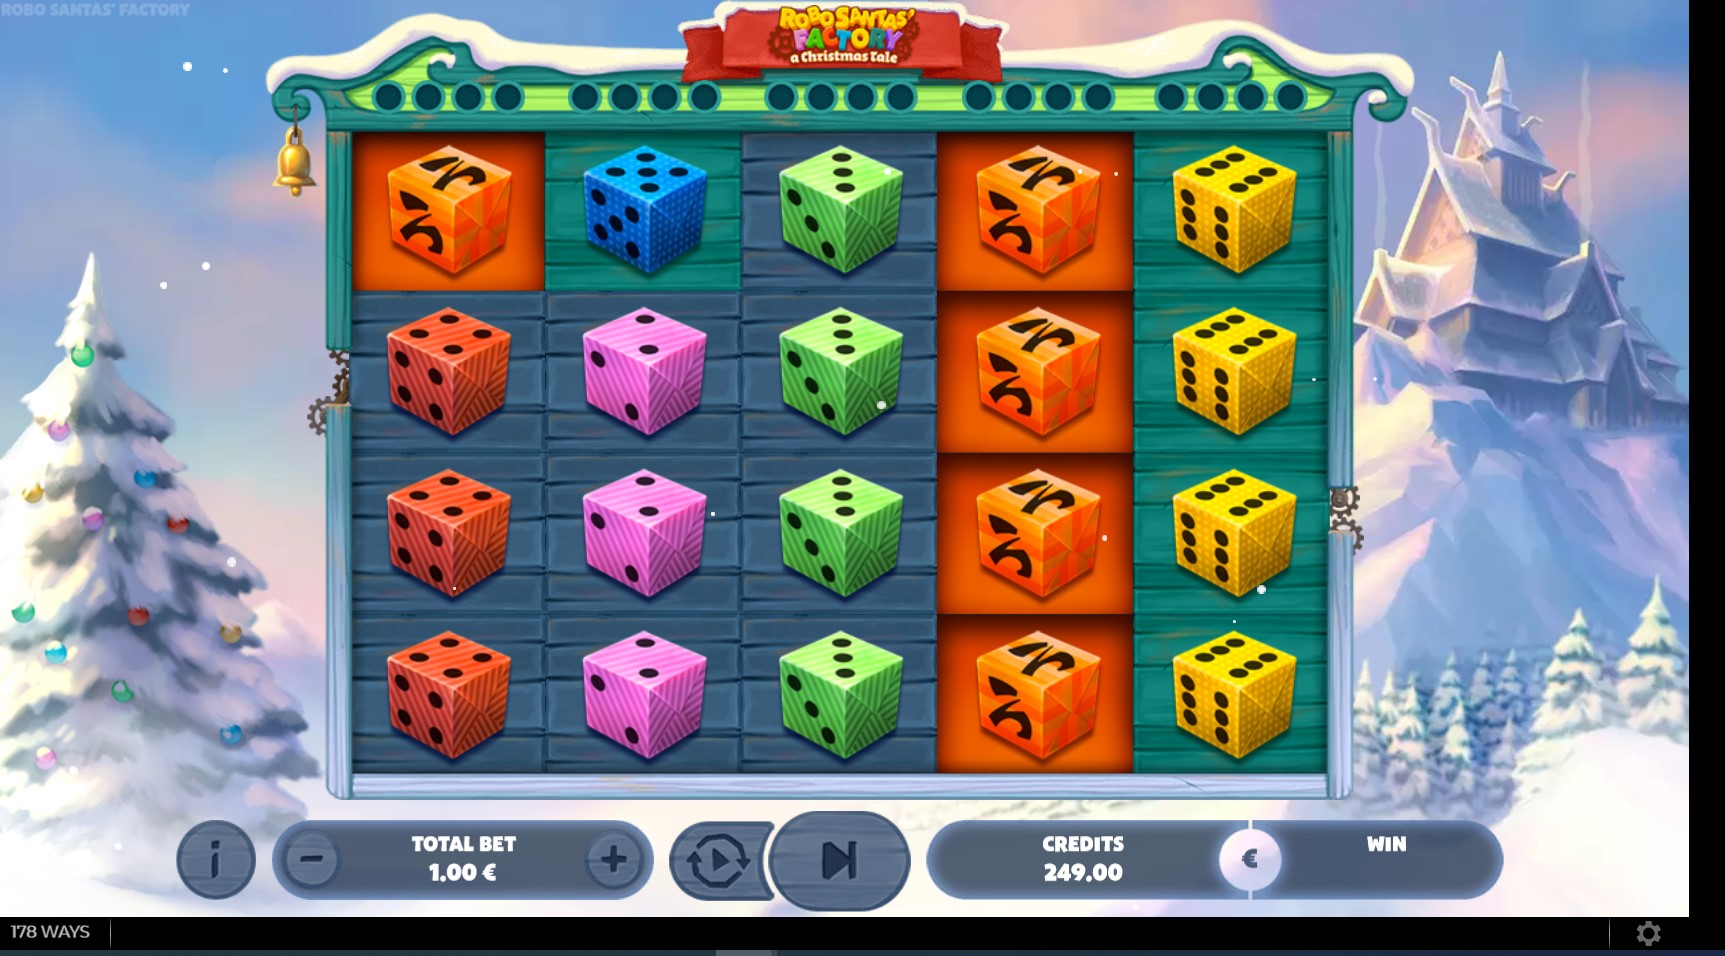 Panache Casino Mobile Slot Games Review